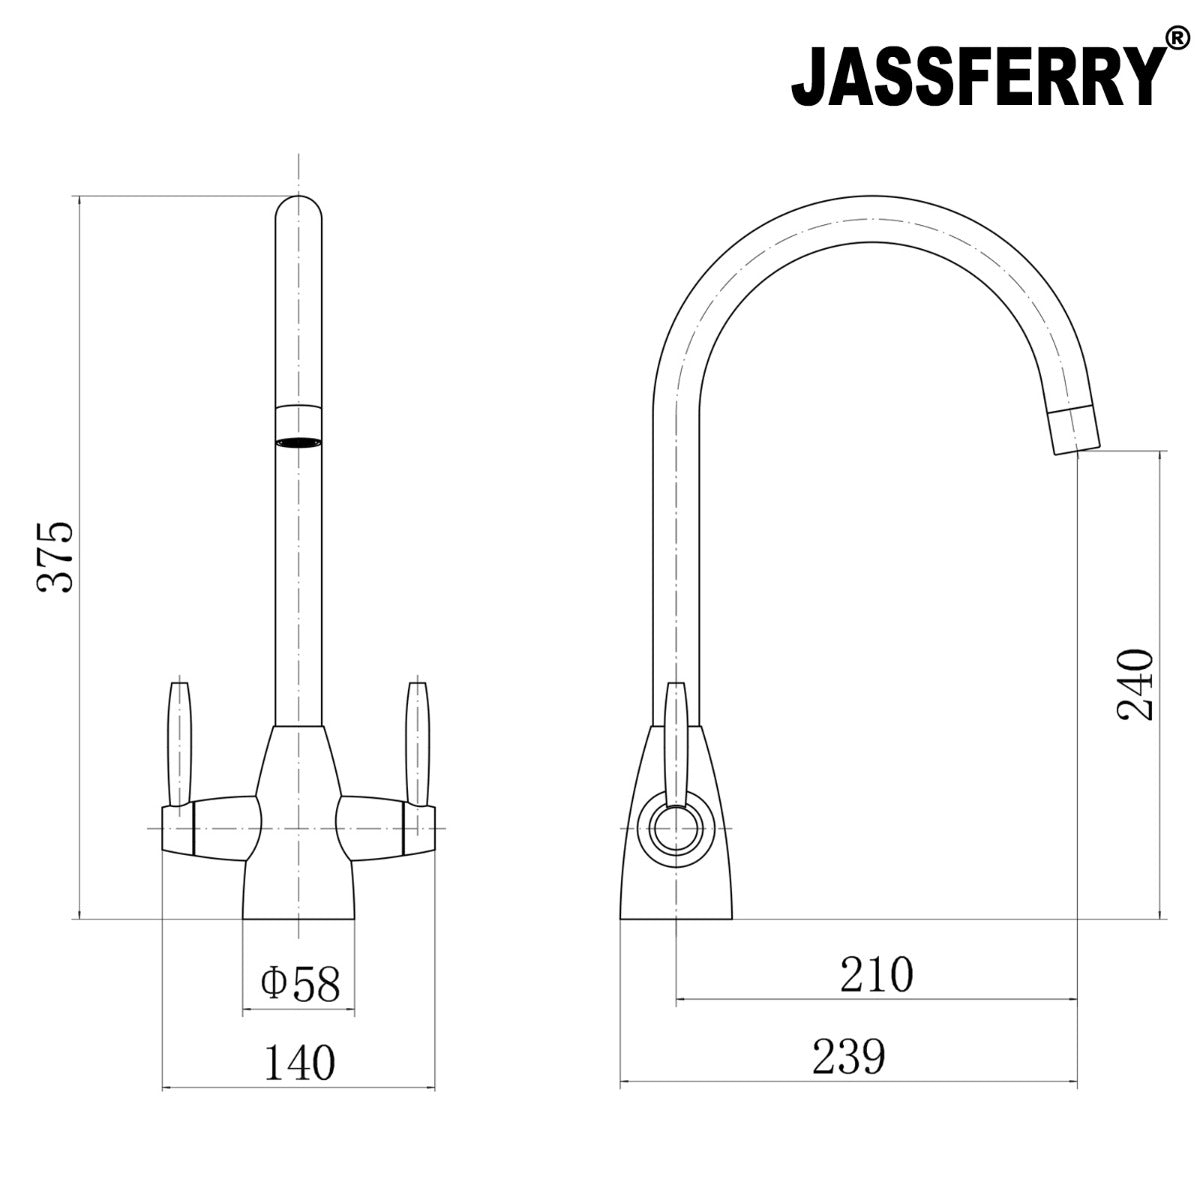 JassferryJASSFERRY New Monobloc Mixer Taps Double Lever Kitchen Sink Polished ChromeTaps